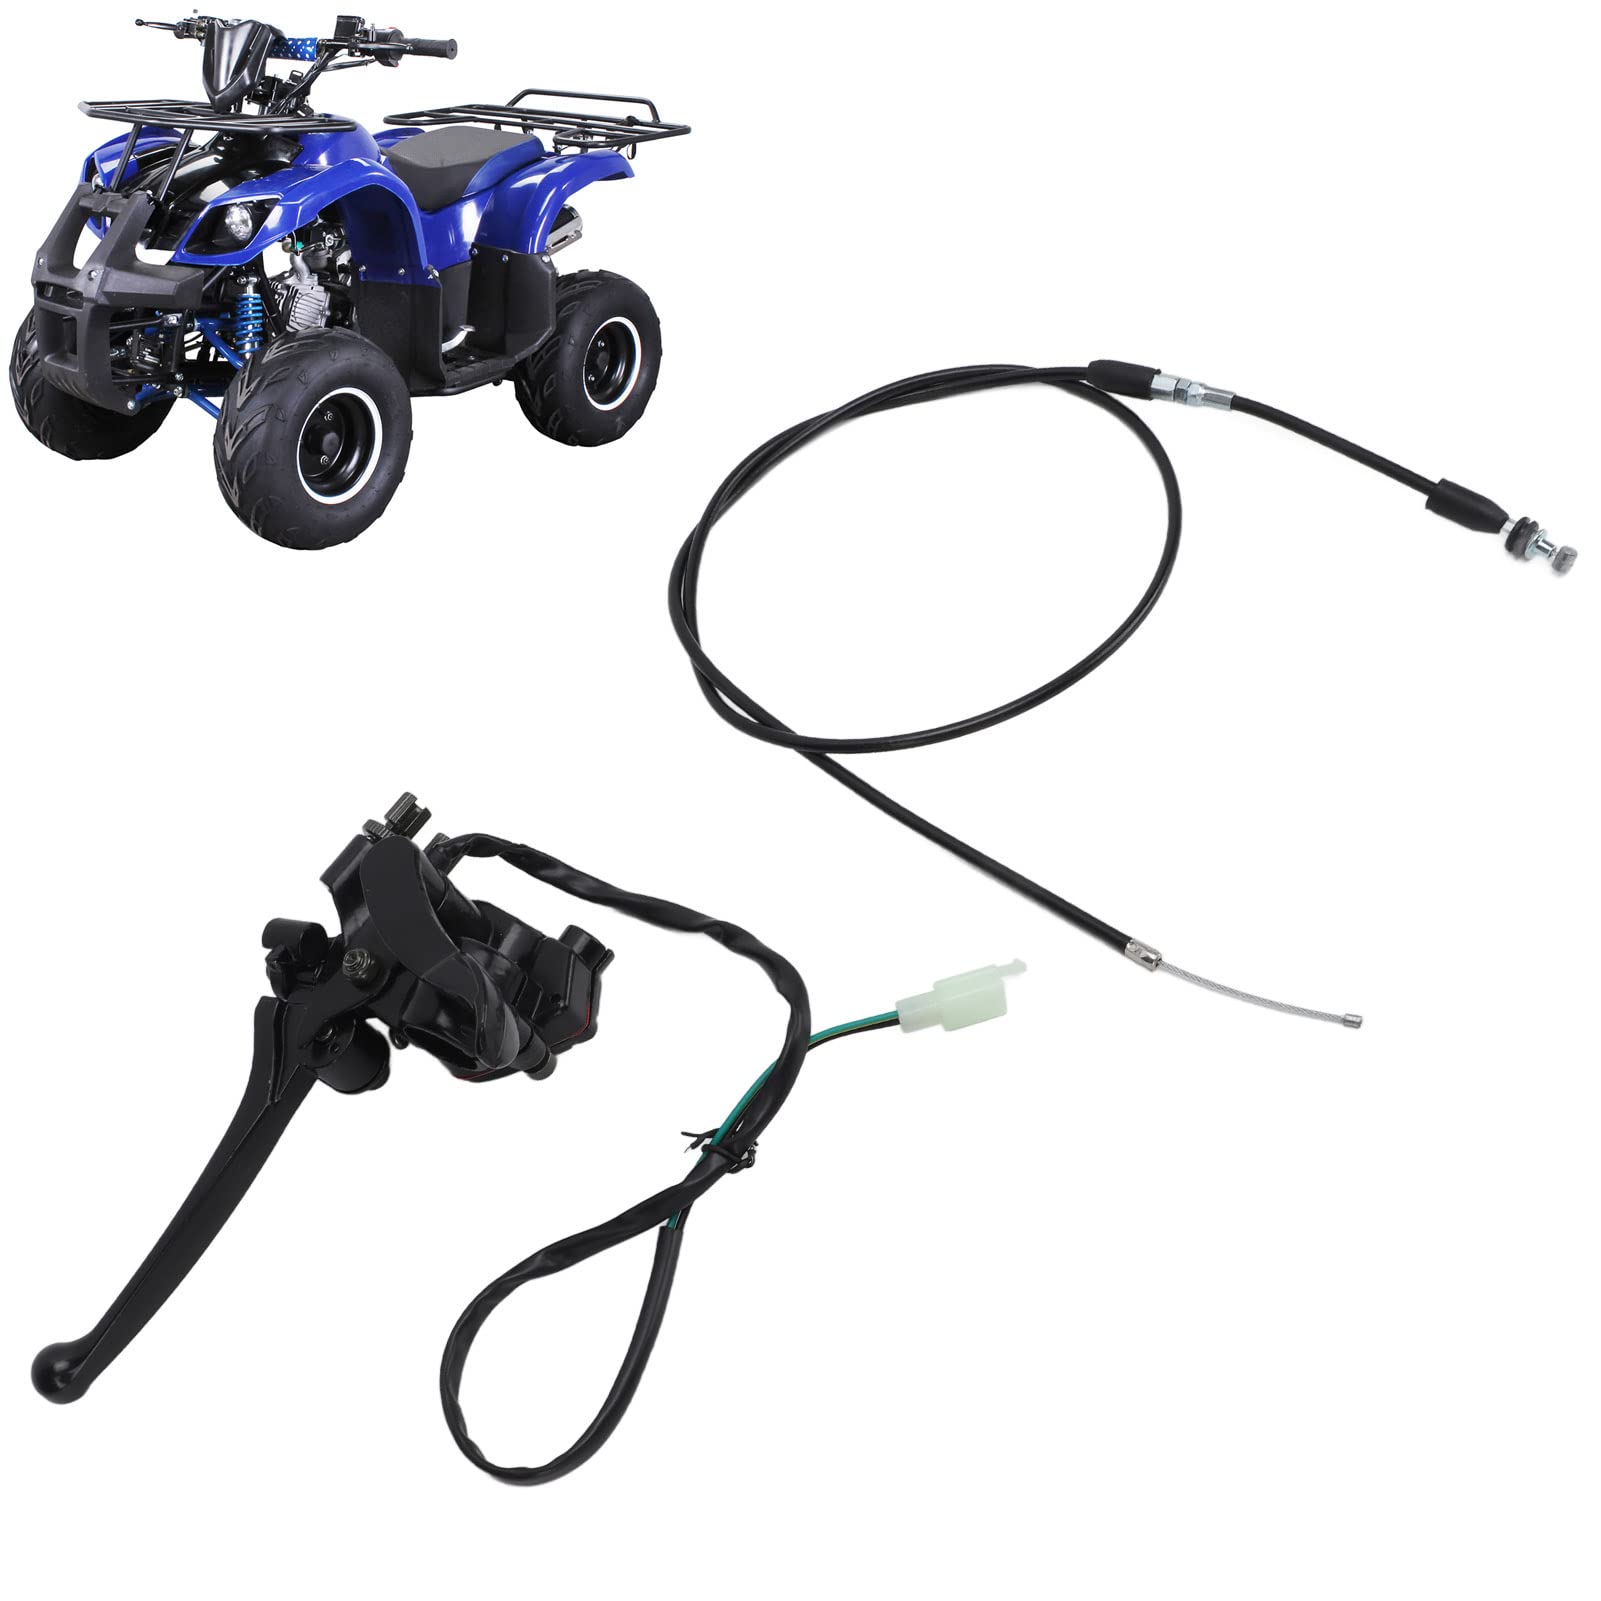 Thumb Throttle Dual Brake Lever, Thumb Throttle Cable with Dual Brake Lever Assy 22 mm Aluminiumlegierung für 50‑250 cc ATV Go Kart von Tefola